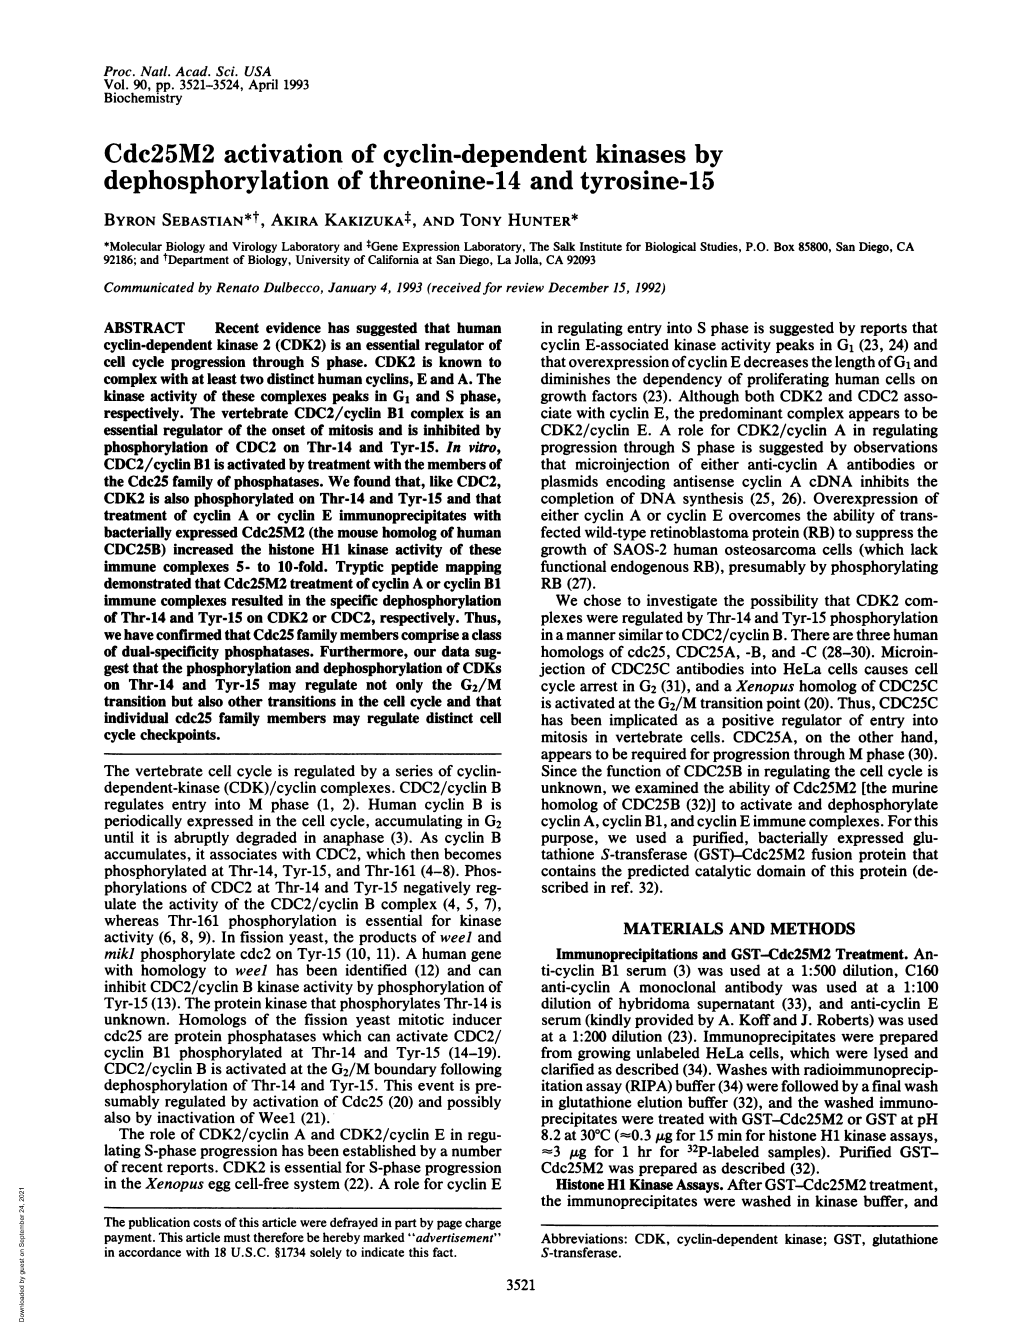 Dephosphorylation of Threonine-14 and Tyrosine-15